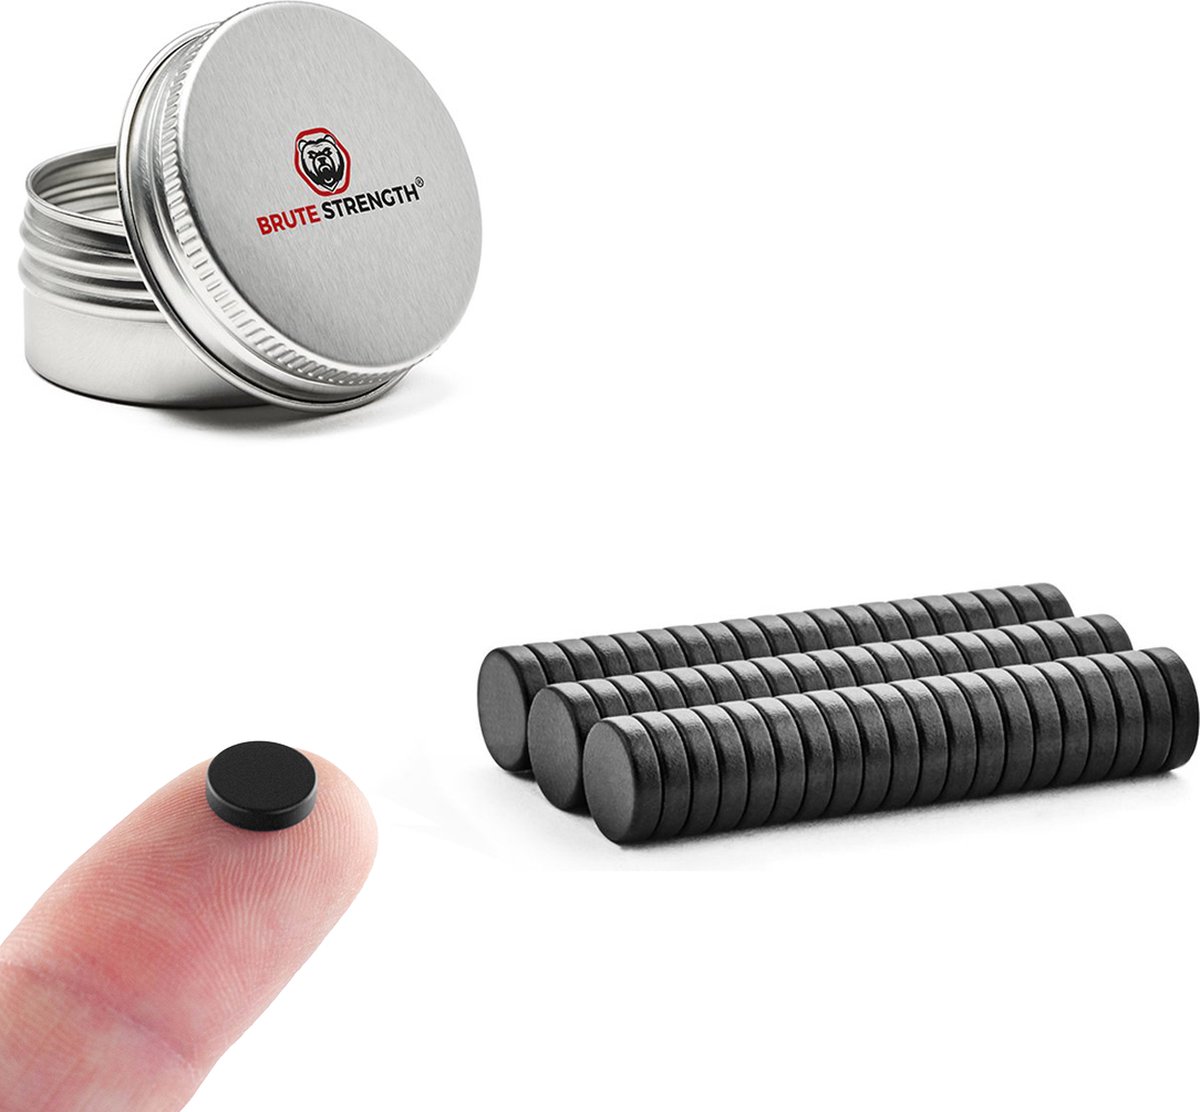 Brute Strength - Super sterke magneten - Rond - 8 x 2 mm - 60 Stuks | Zwart - Neodymium magneet sterk - Voor koelkast - whiteboard - Brute Strength